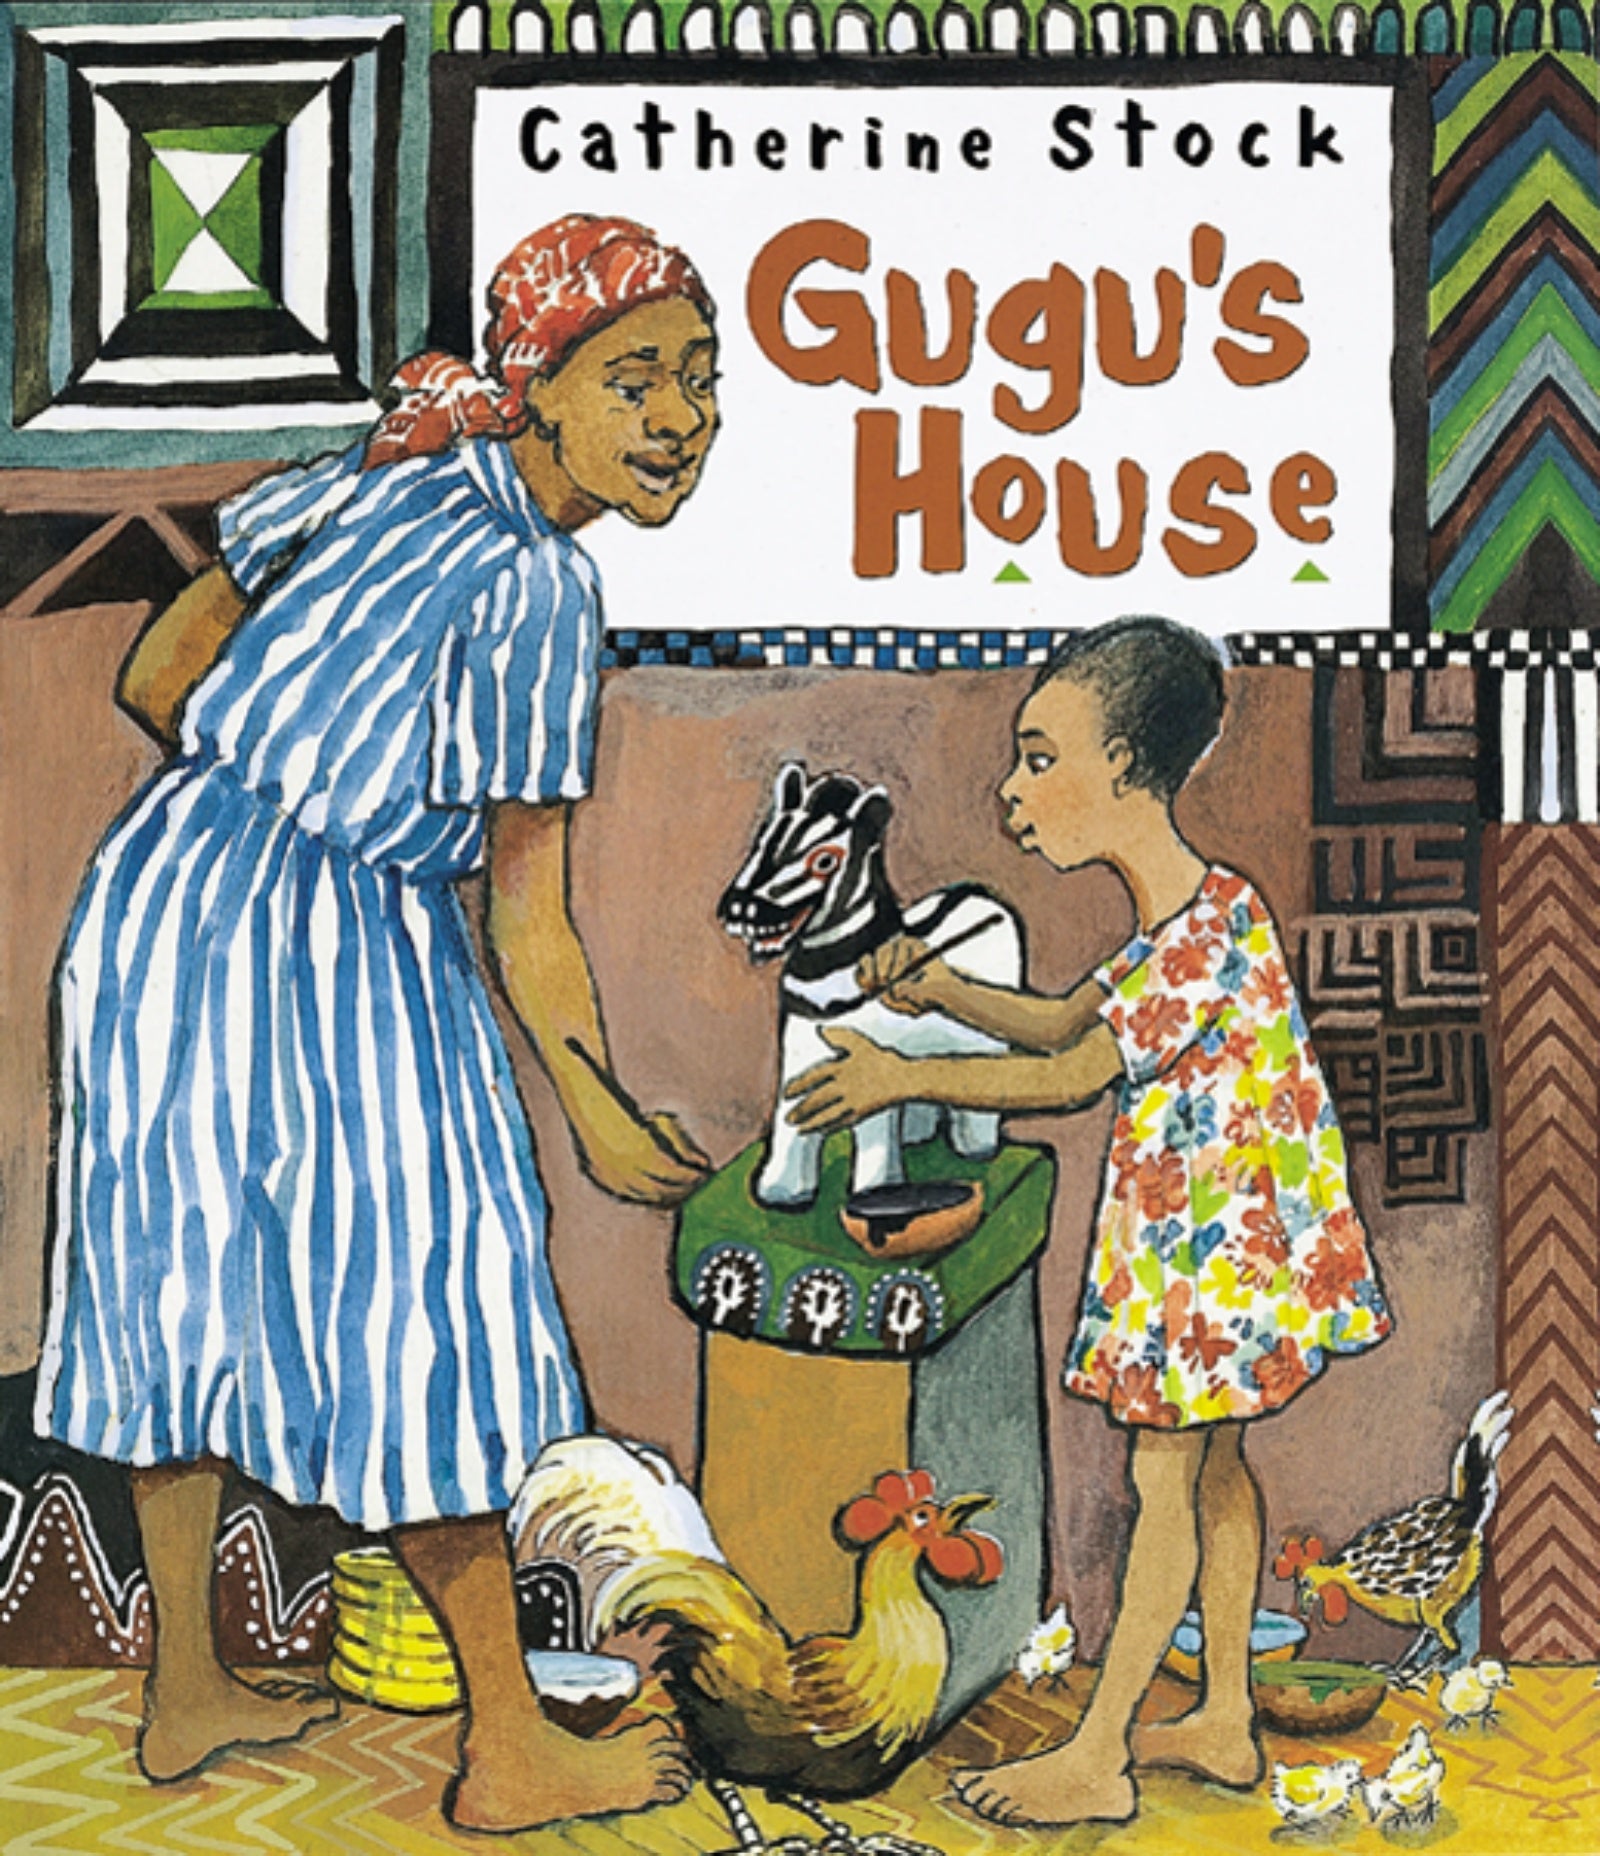 Gugu's House